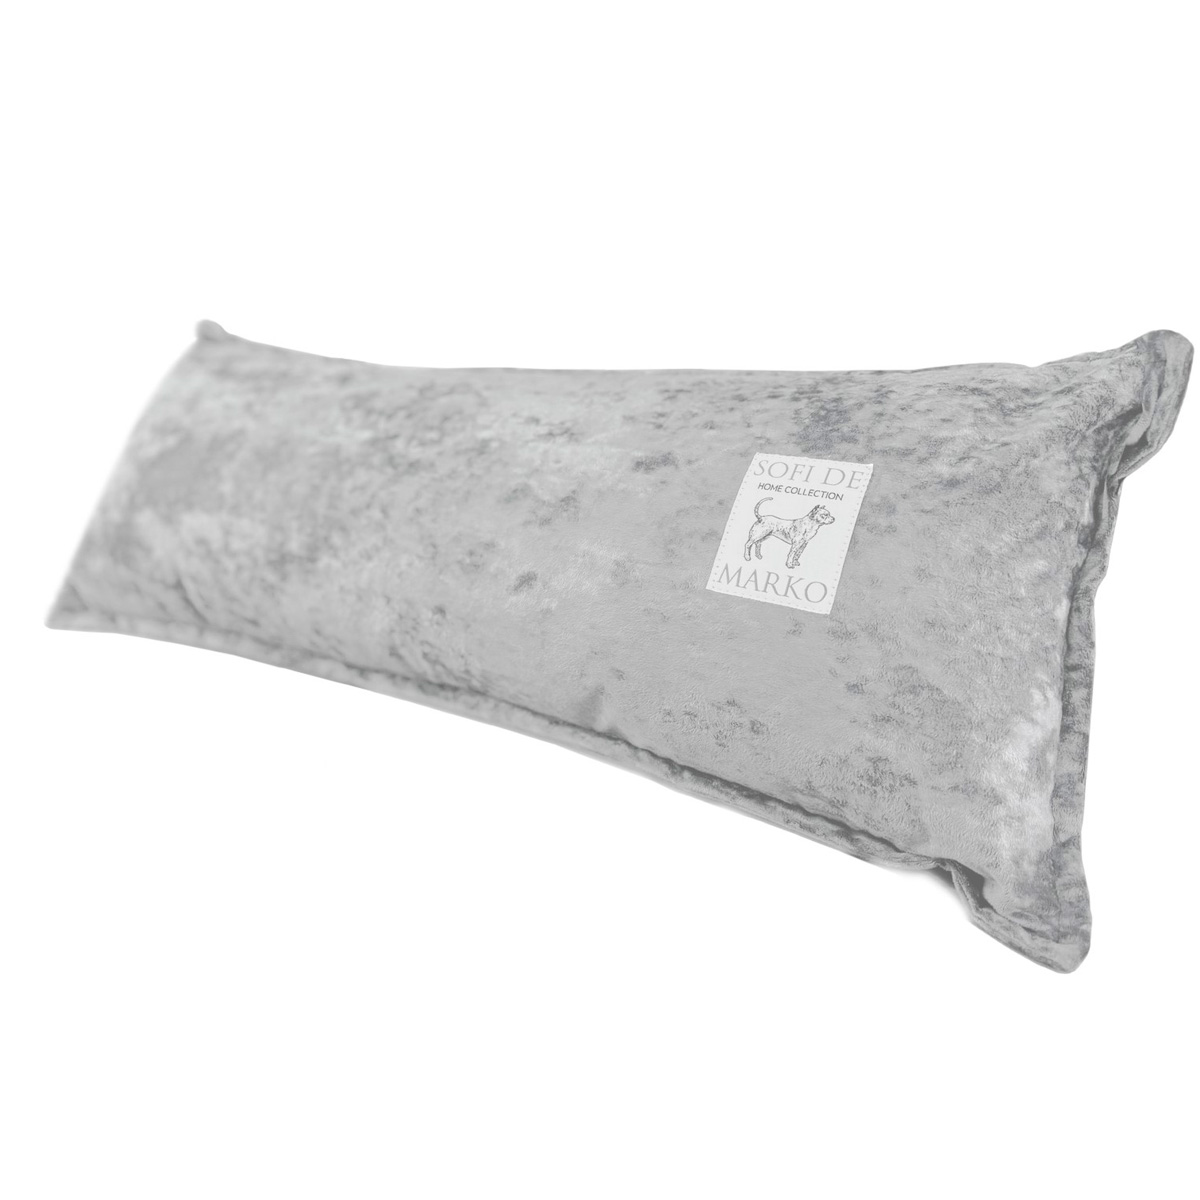 Подушка декоративная Sofi de Marko Брайан 32x90см, цвет светлый серый декоративная подушка челси челси